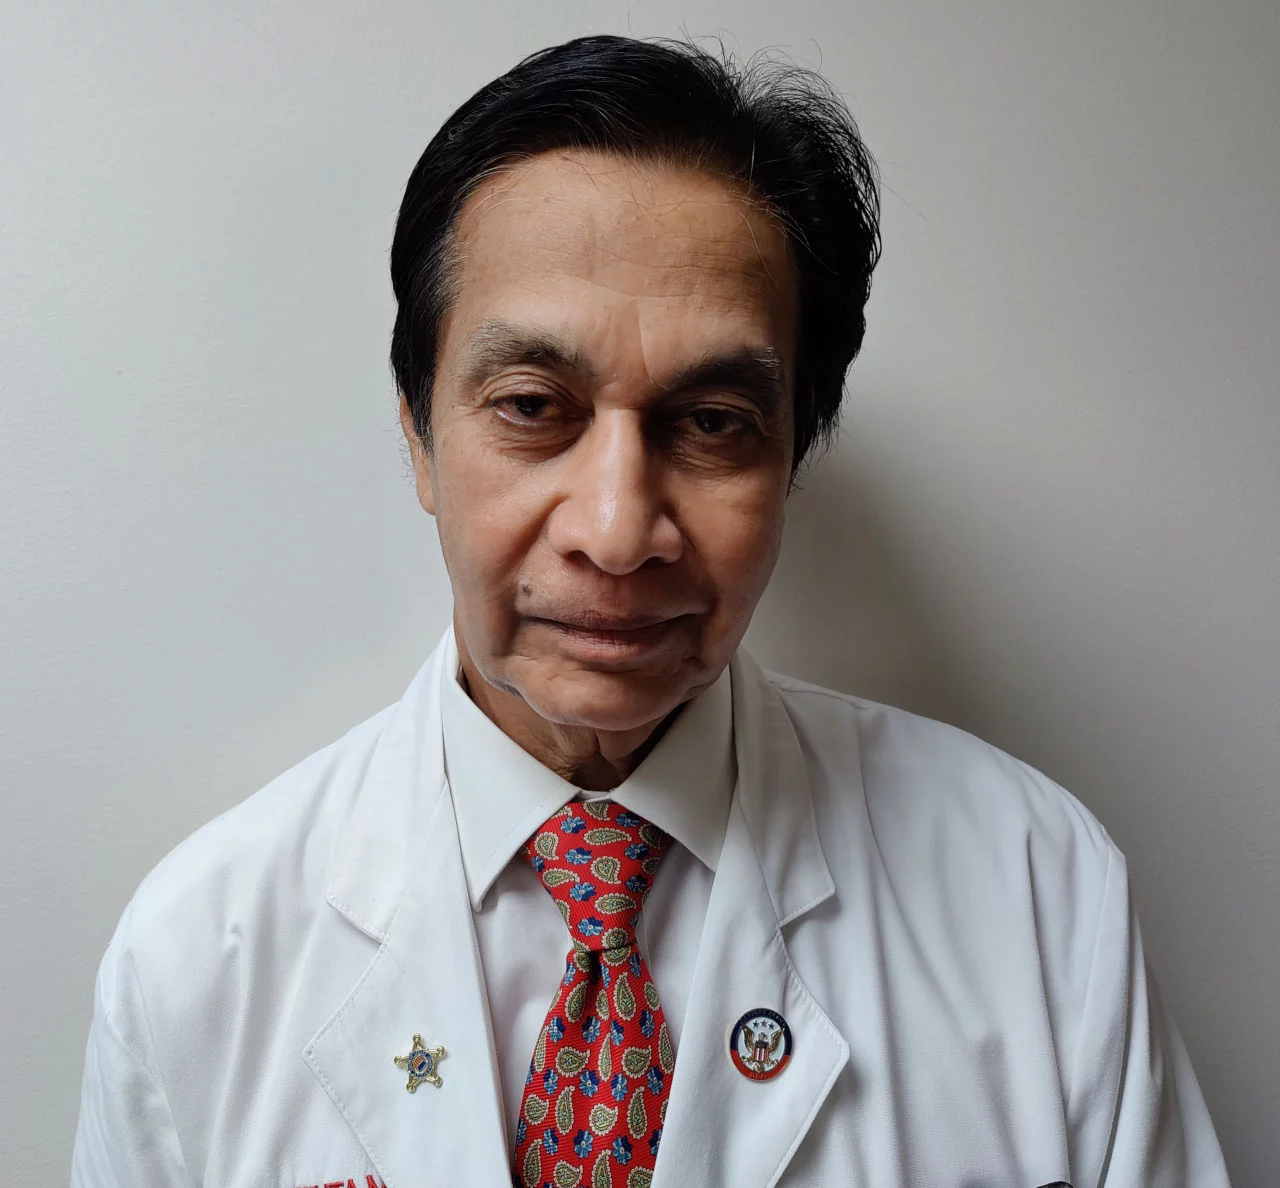 Meet the Best Ent Surgeon Dr. Navin Mehta in New York City.